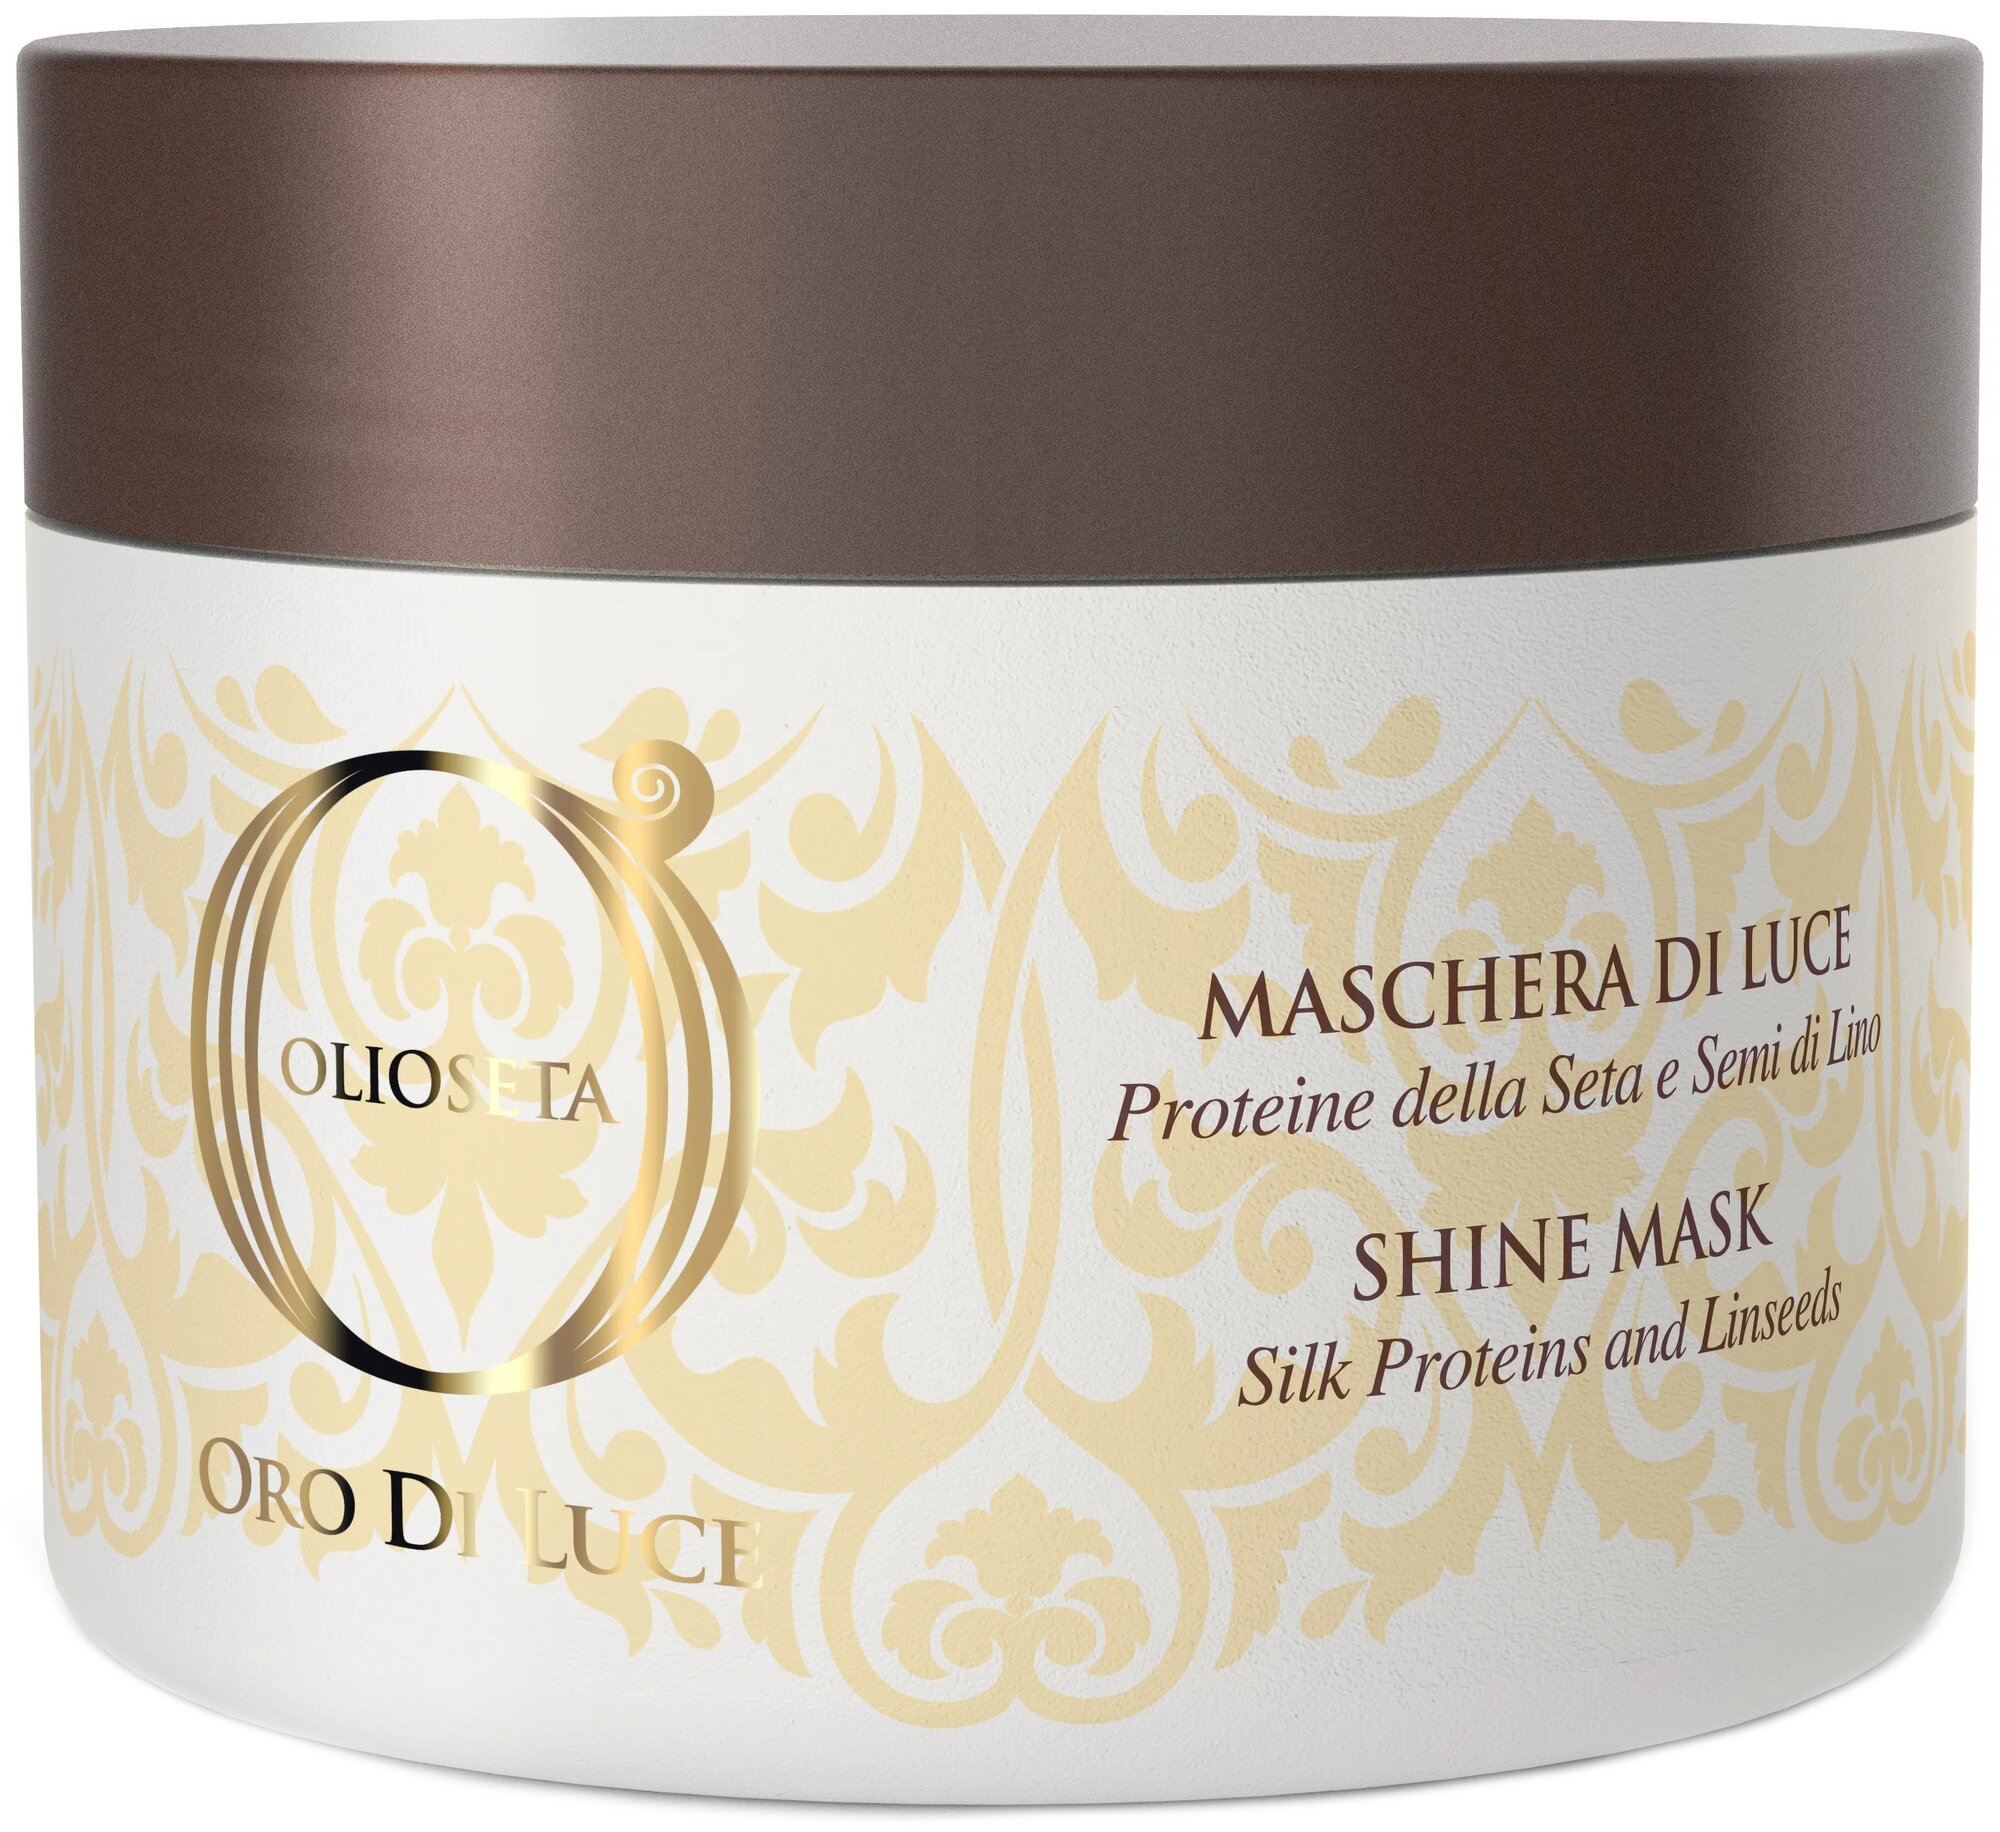 Barex Olioseta Oro Di Luce Маска-блеск с протеинами шелка и семенем льна Shine Mask для волос, 200 мл, банка